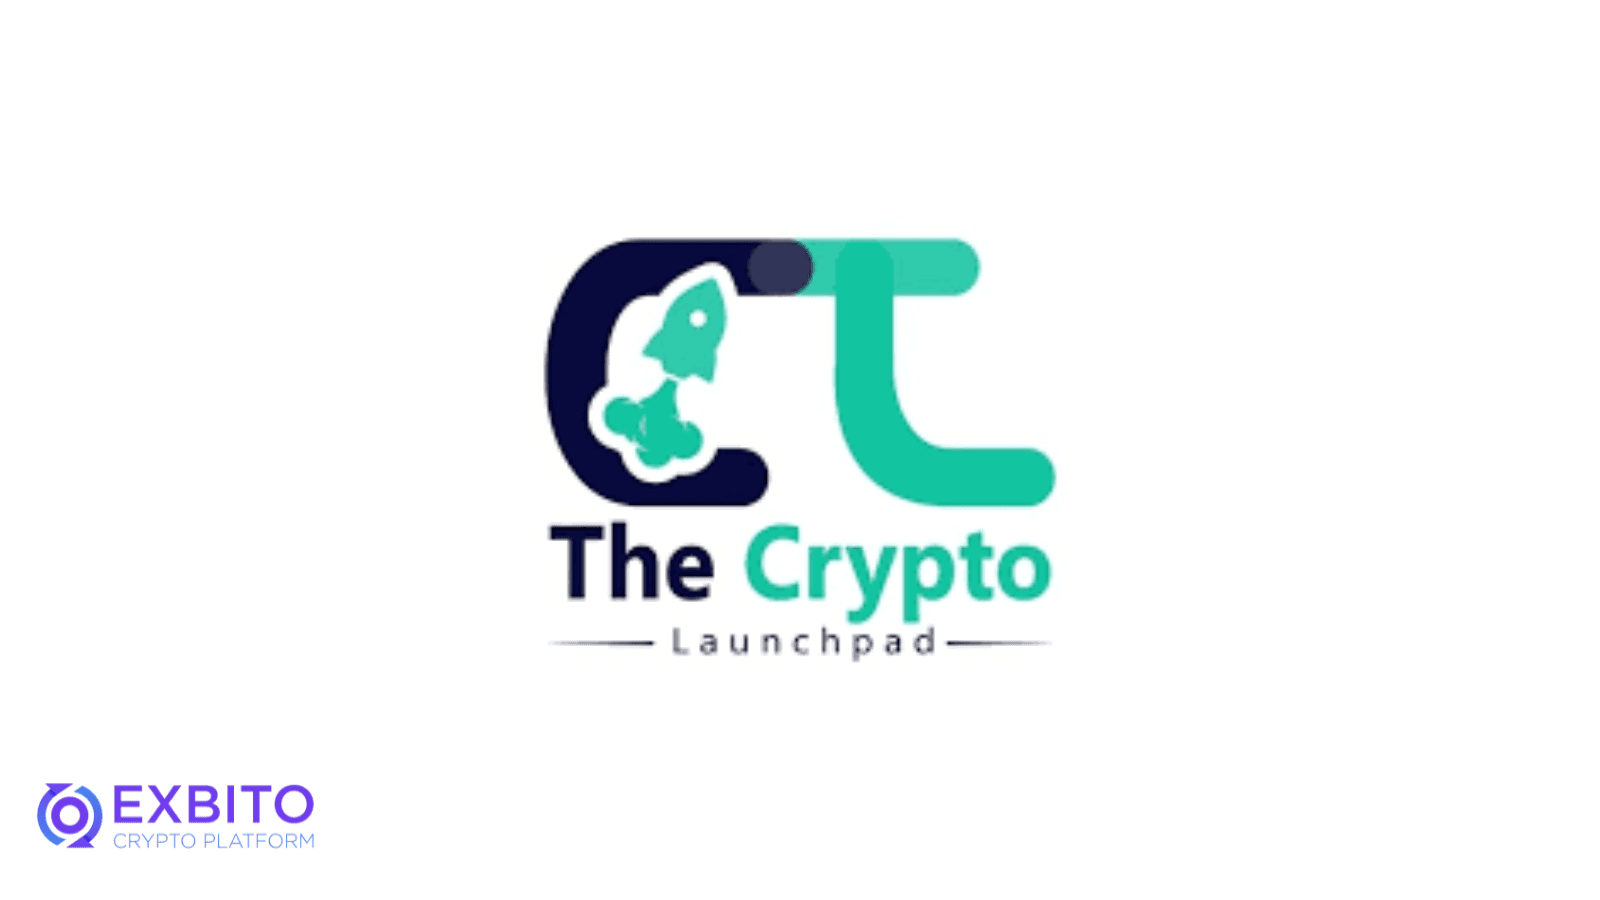 انواع لانچ پد کریپتو (Crypto Launchpad) کدامند؟